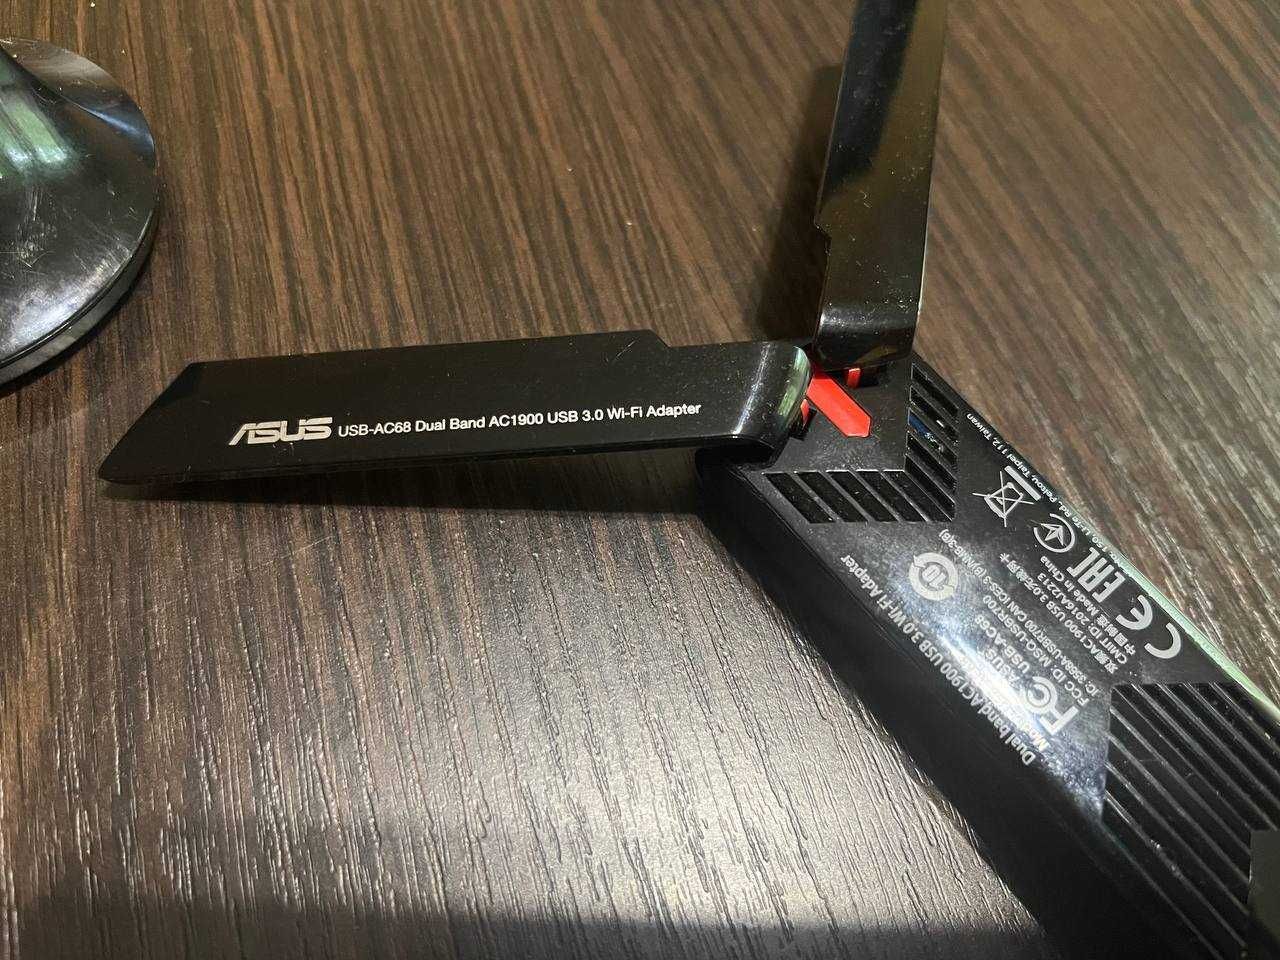 Asus USB-AC68 Wireless-AC1900 Wi-Fi ADAPTER